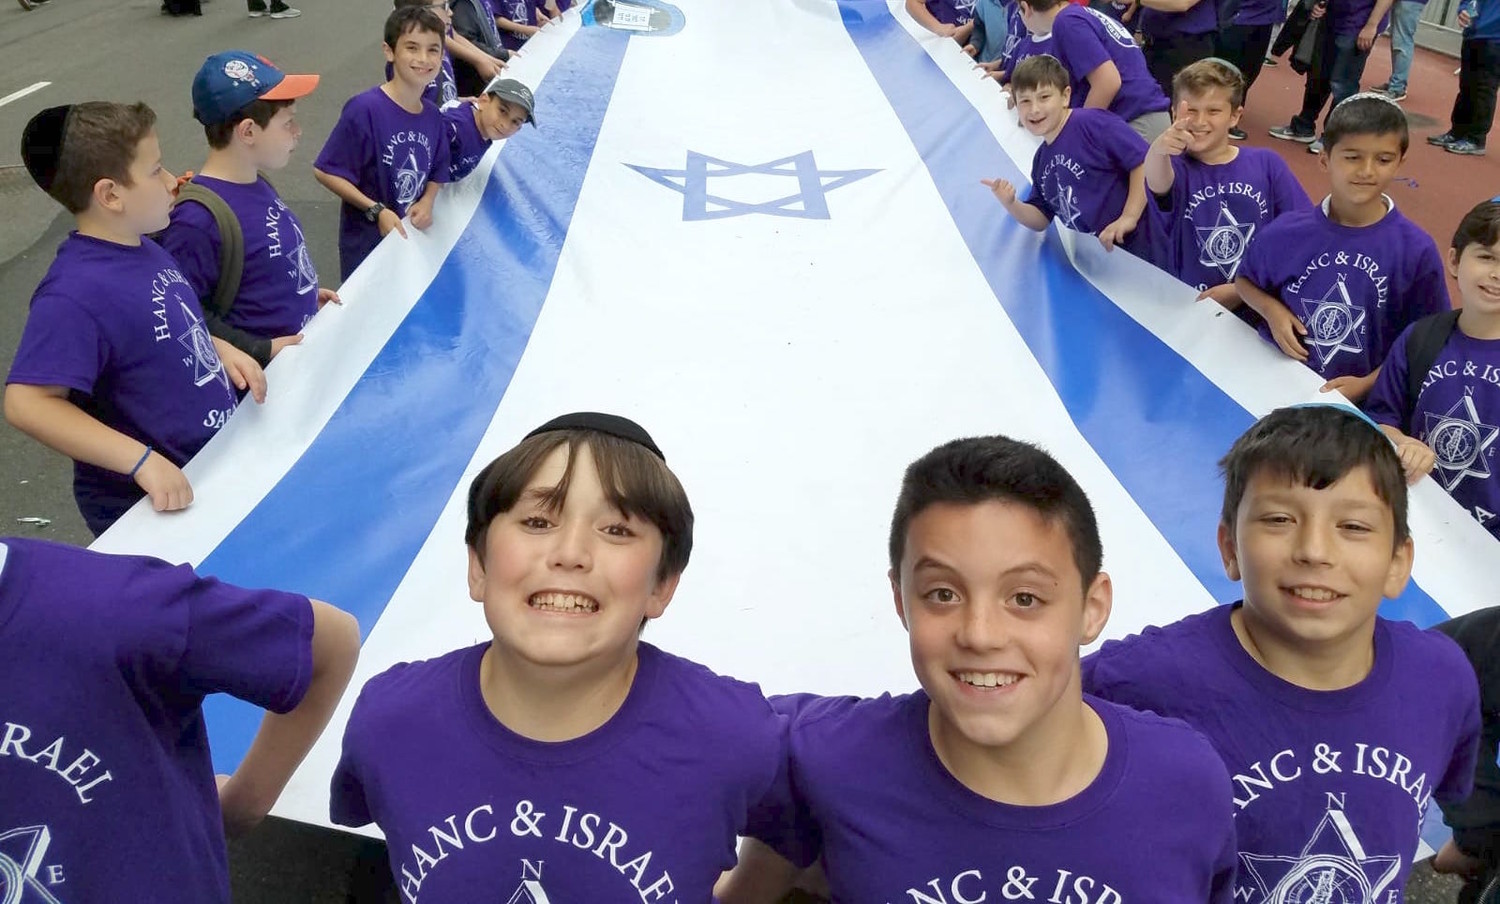 HANC's elementary school rolls out Israel's flag.